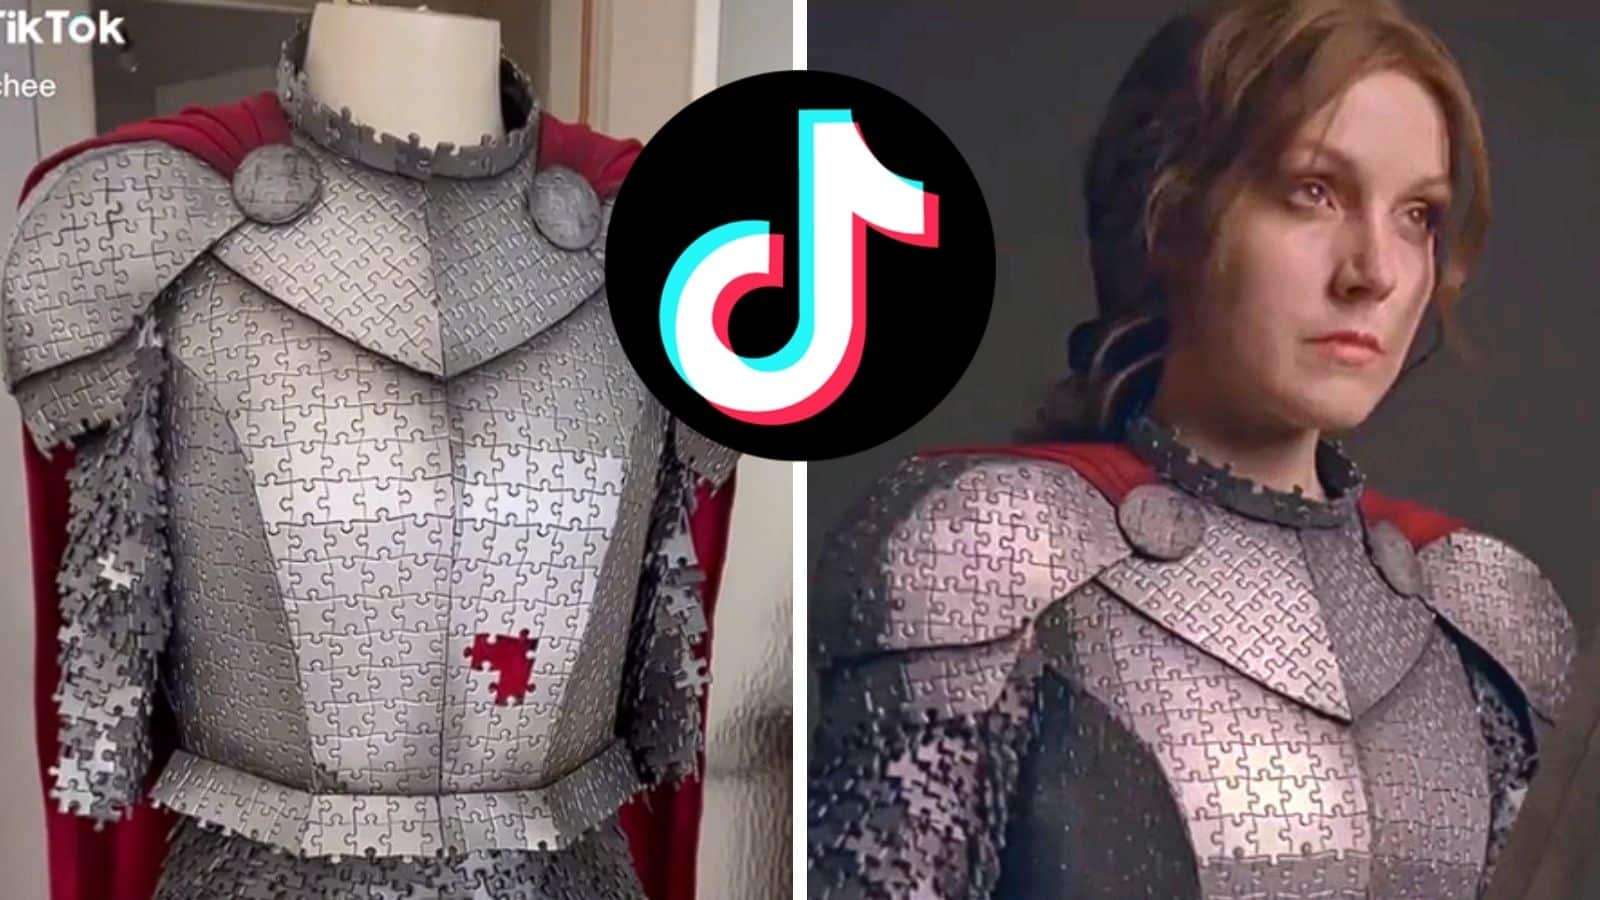 lie_chee puzzle piece knight armor cosplay tiktok header image